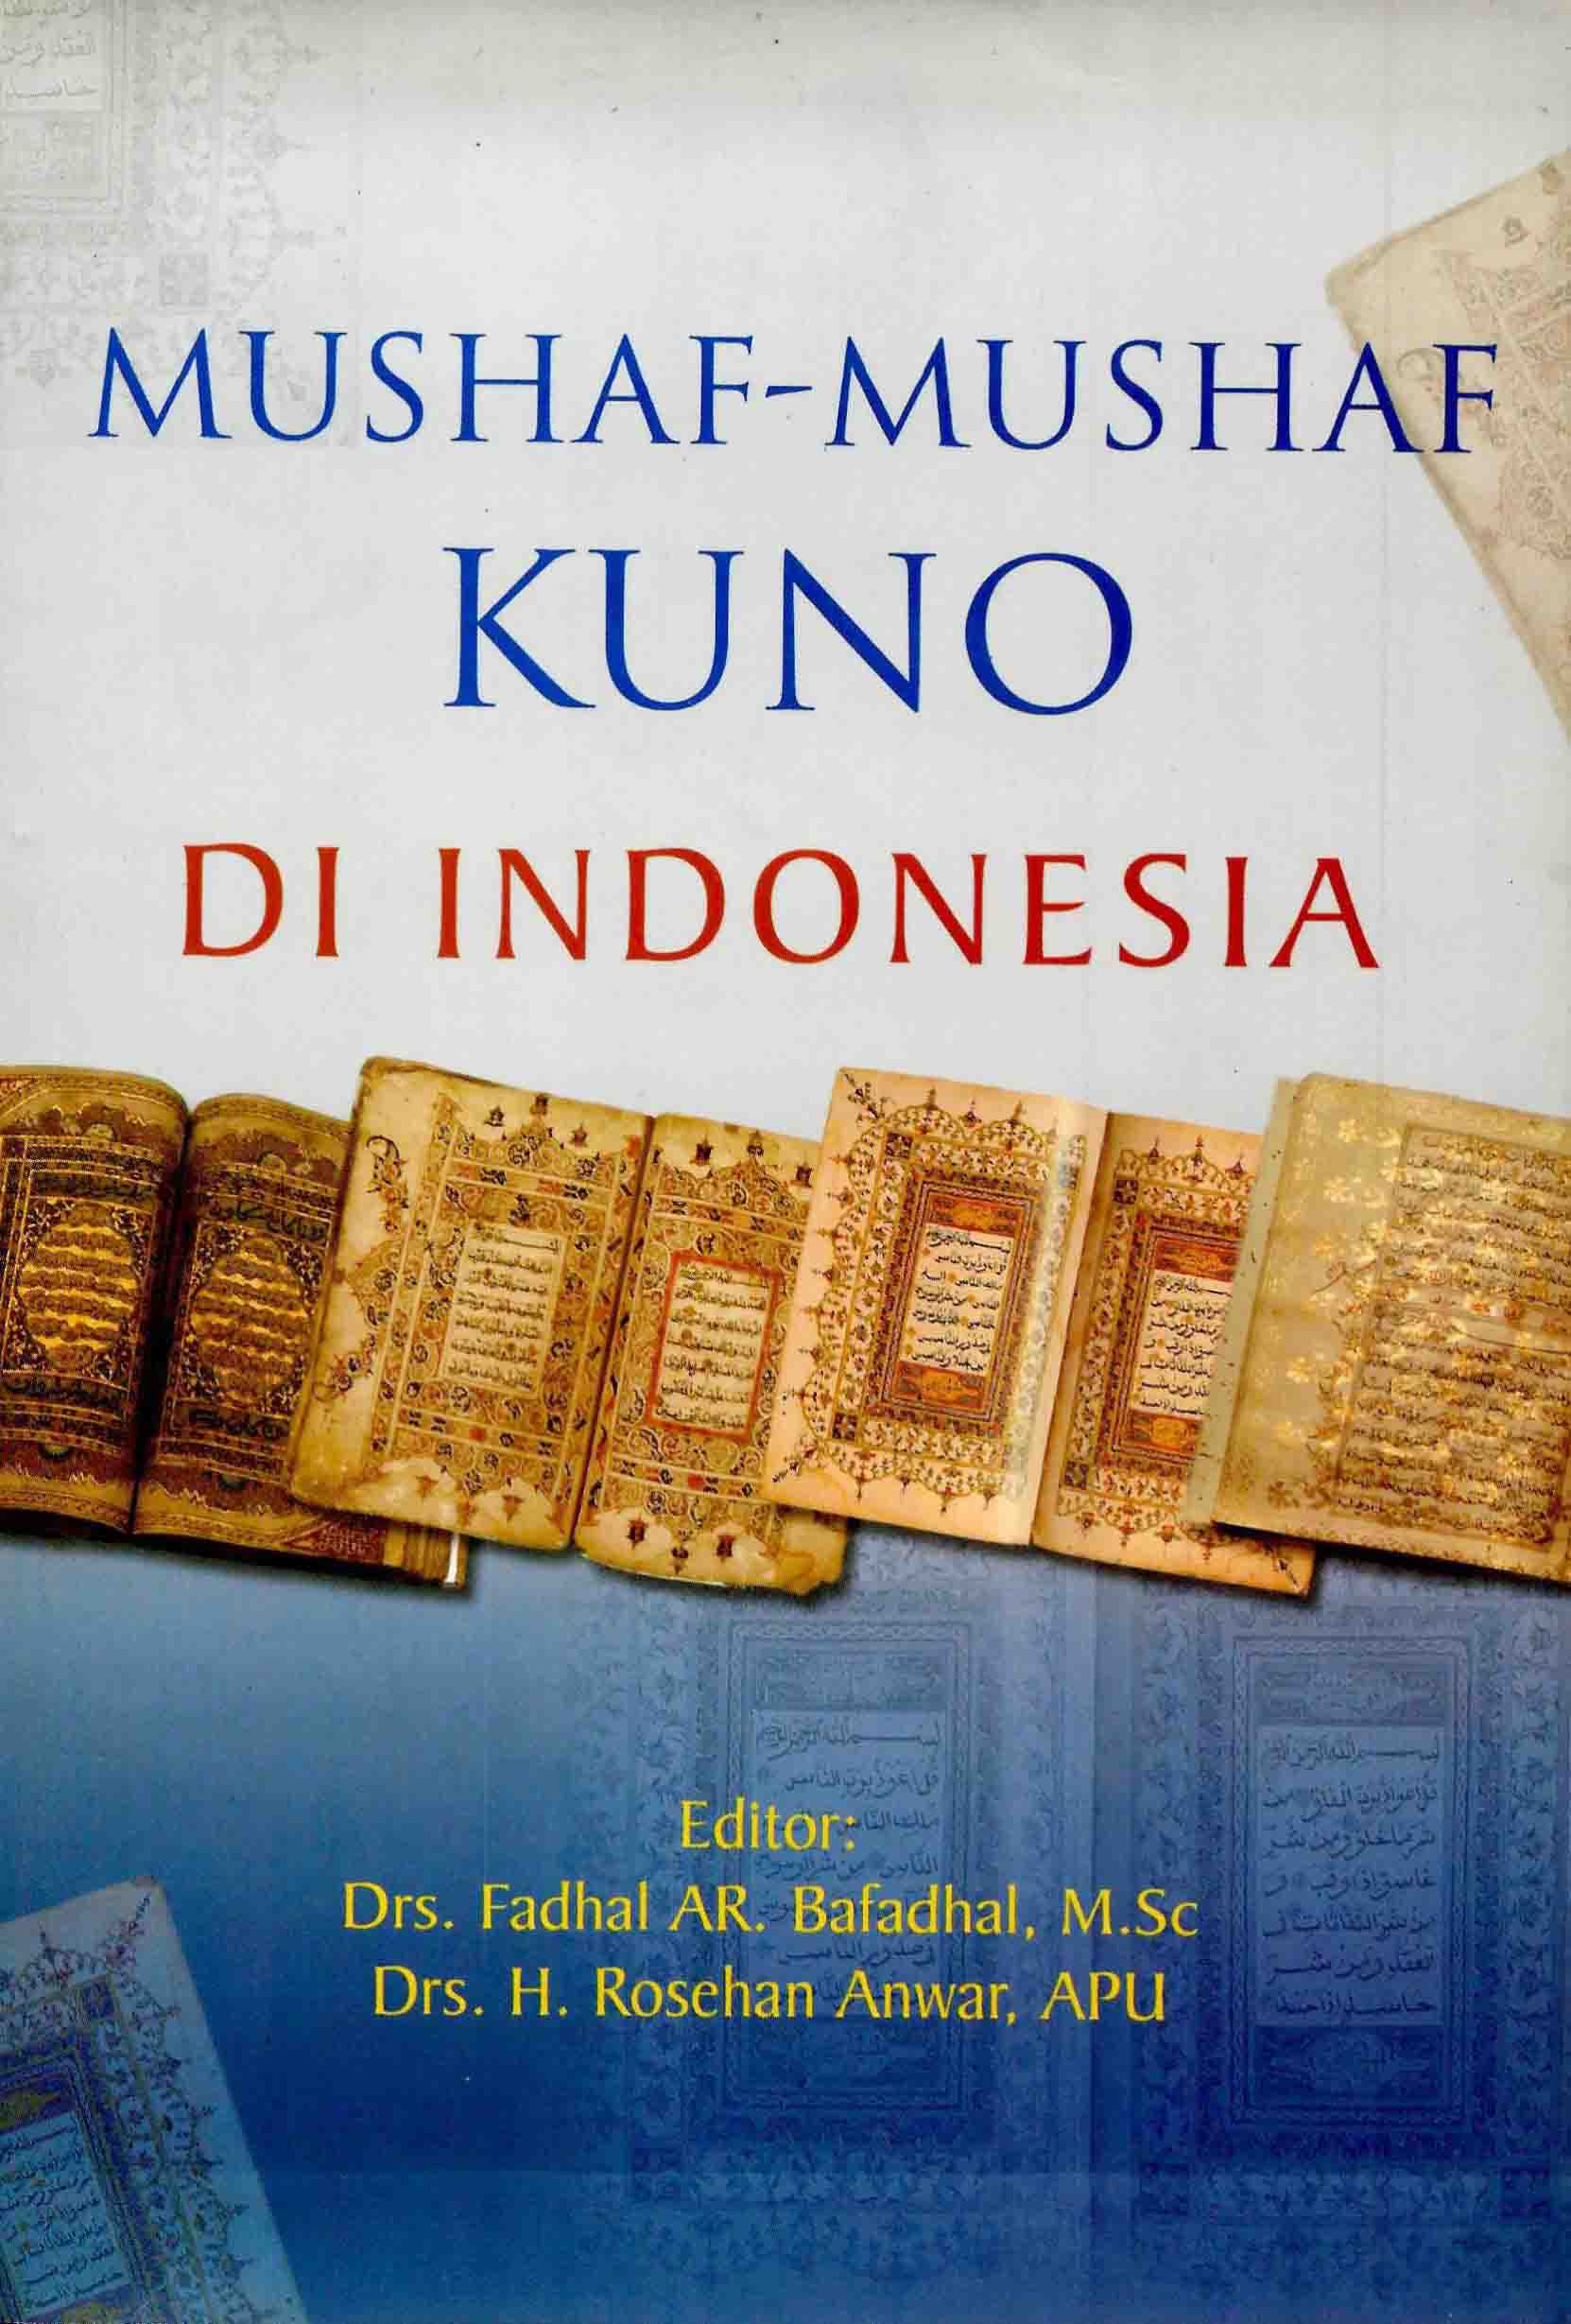 Mushaf-Mushaf Kuno Di Indonesia